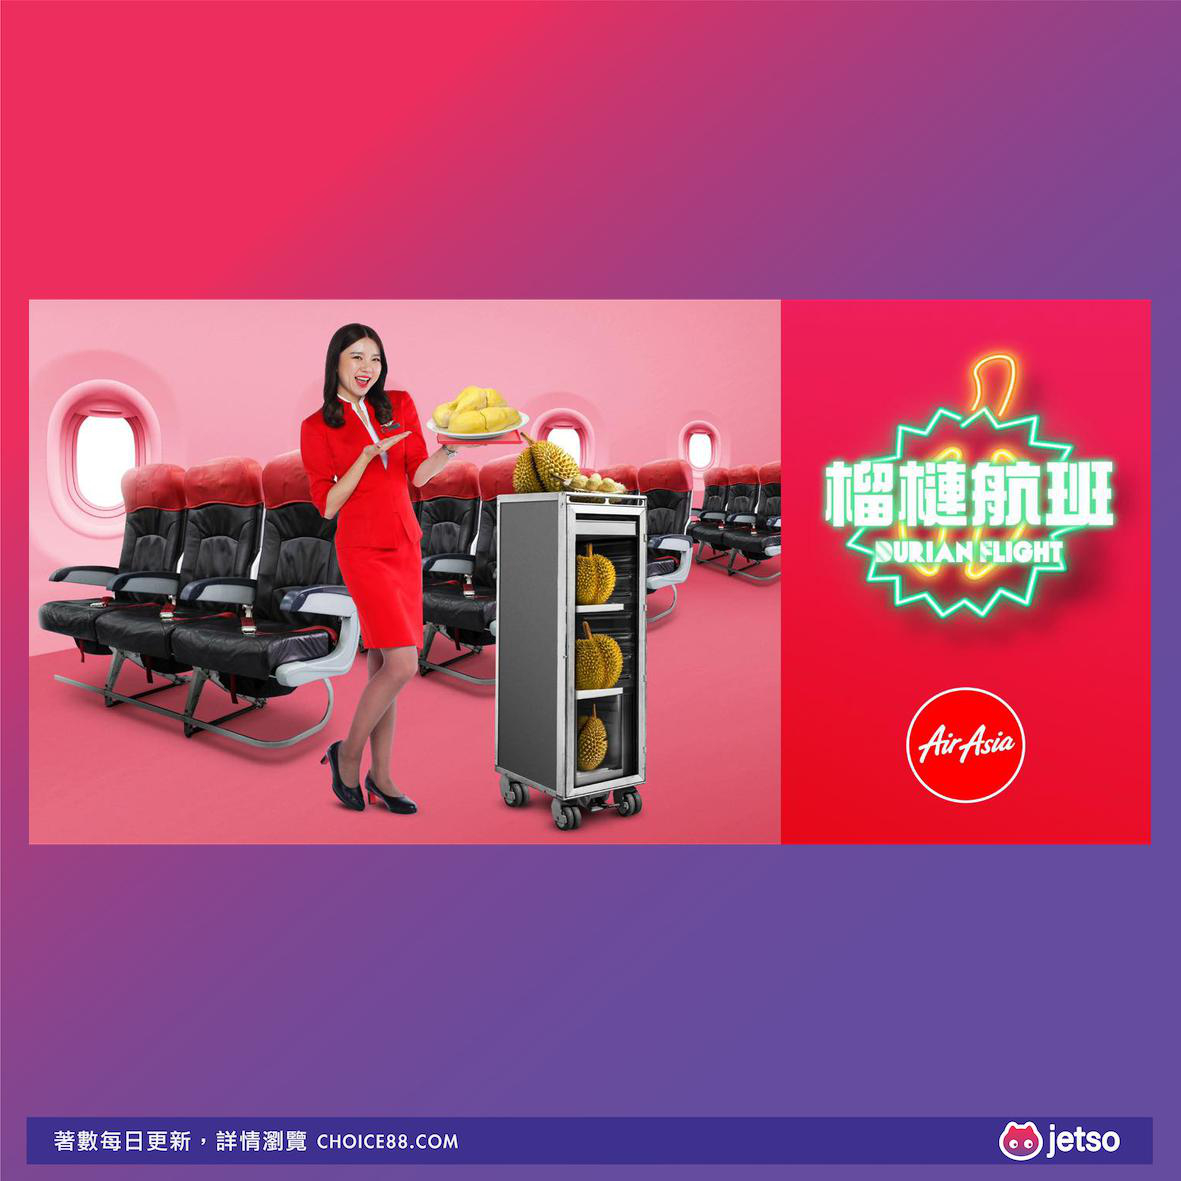 Air Asia : [机票优惠]榴莲爱好者的专属飞行体验